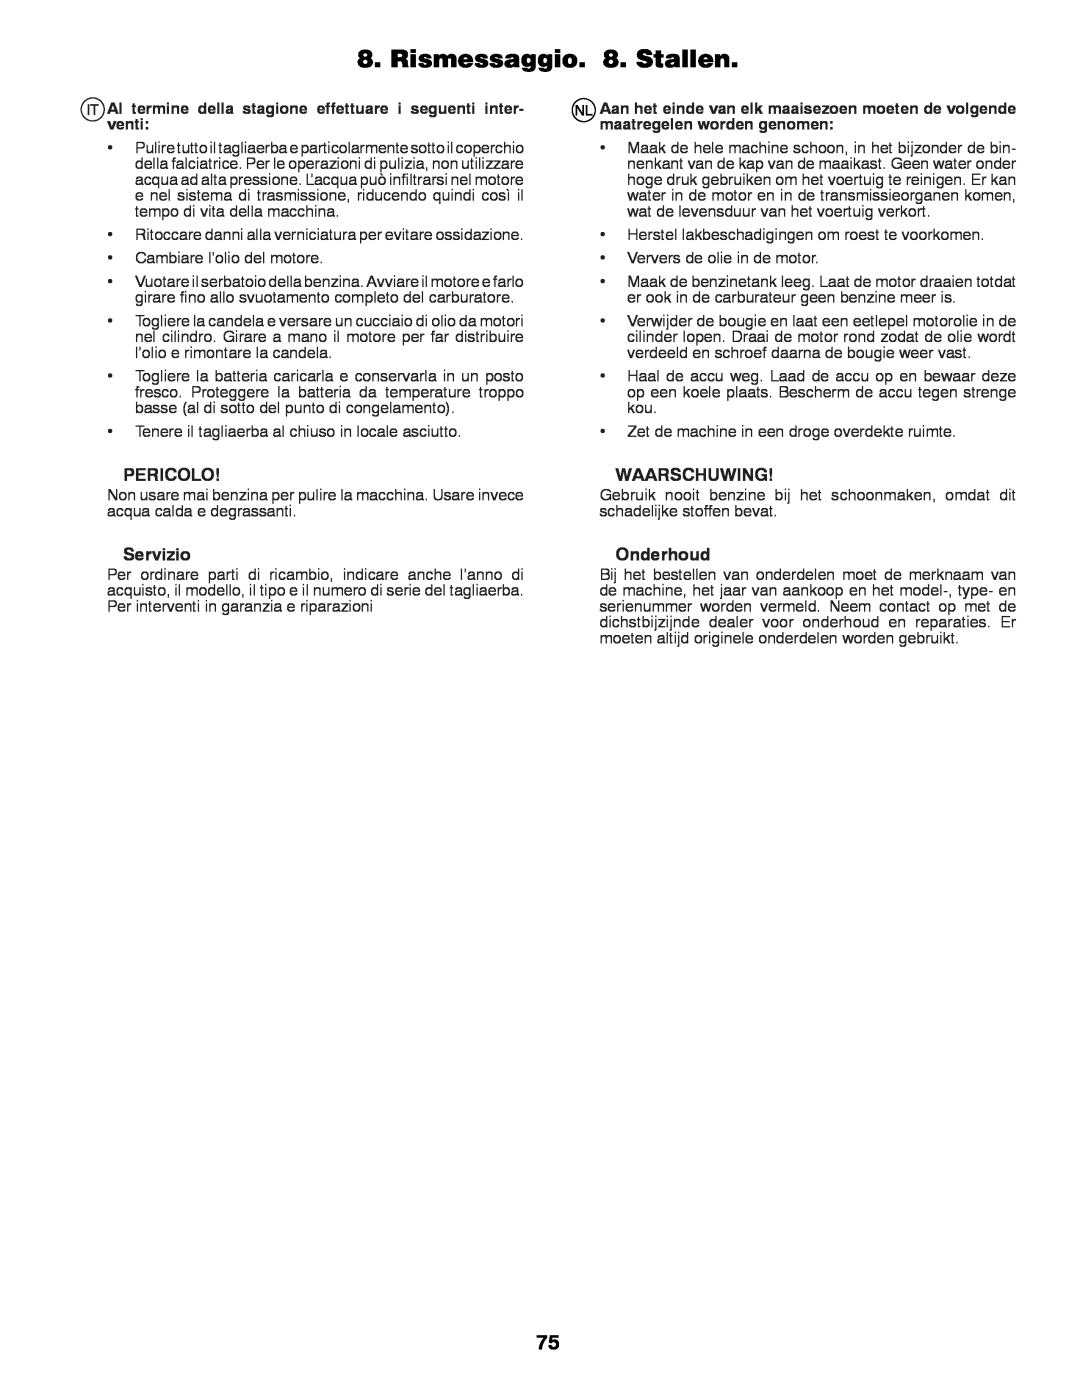 Partner Tech P11577 instruction manual Rismessaggio. 8. Stallen, Pericolo, Servizio, Waarschuwing, Onderhoud 